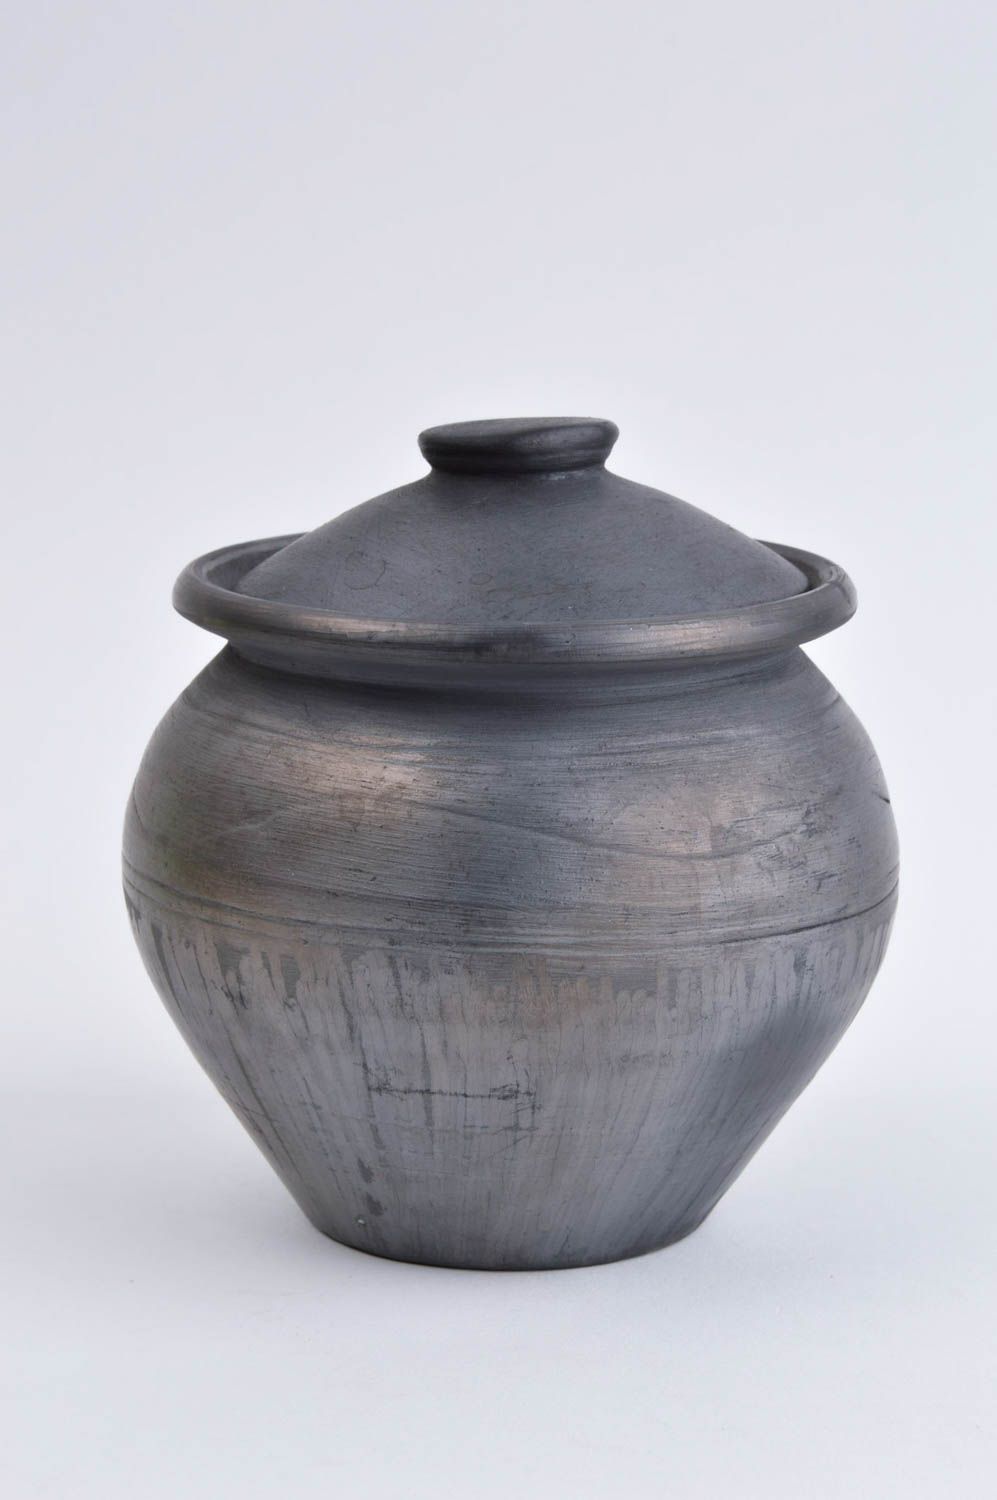 Handmade ceramic pot pottery works kitchen supplies ceramic cookware ideas photo 2